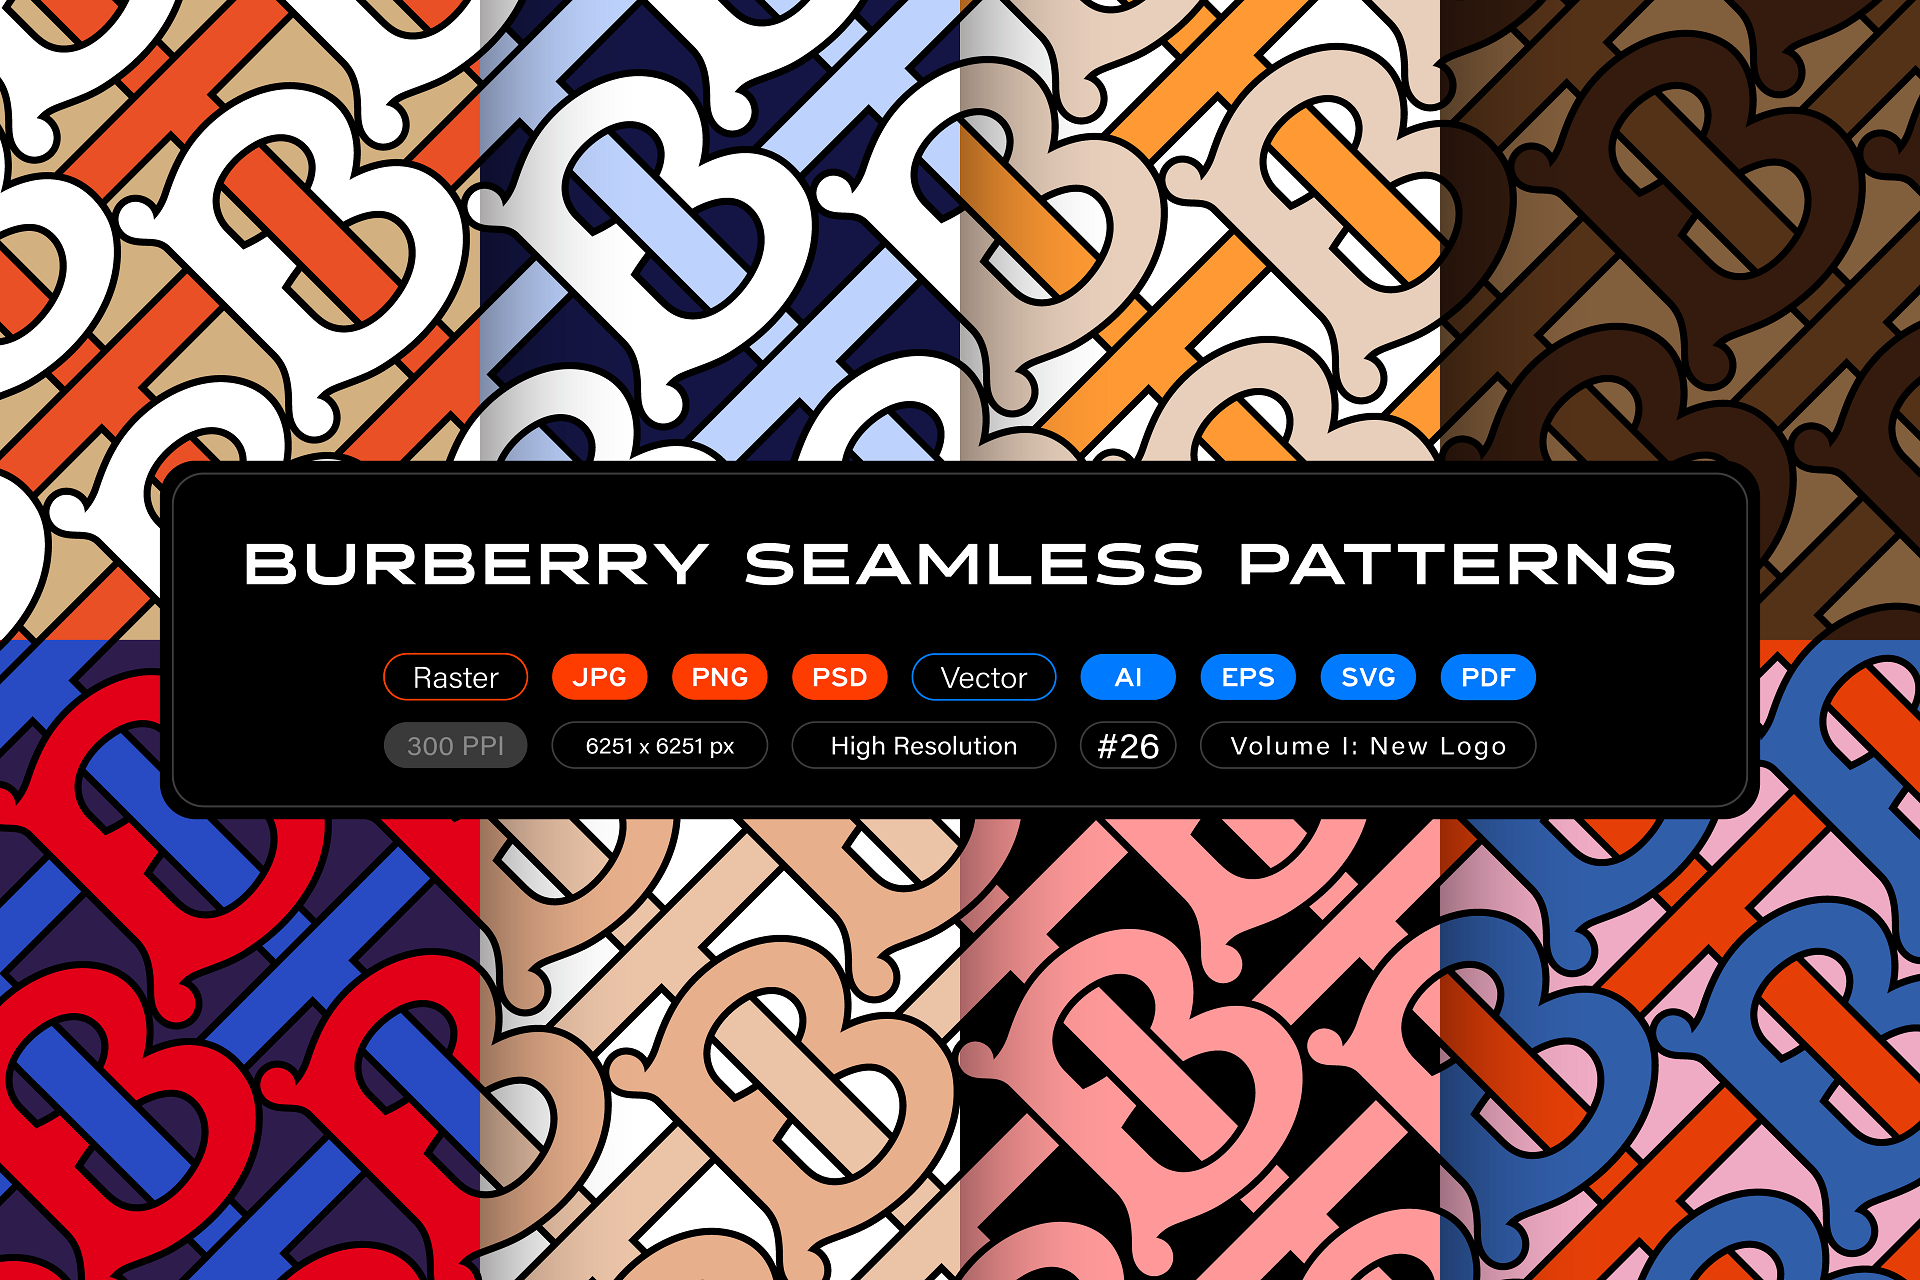 Actualizar 58+ imagen burberry new pattern - Abzlocal.mx